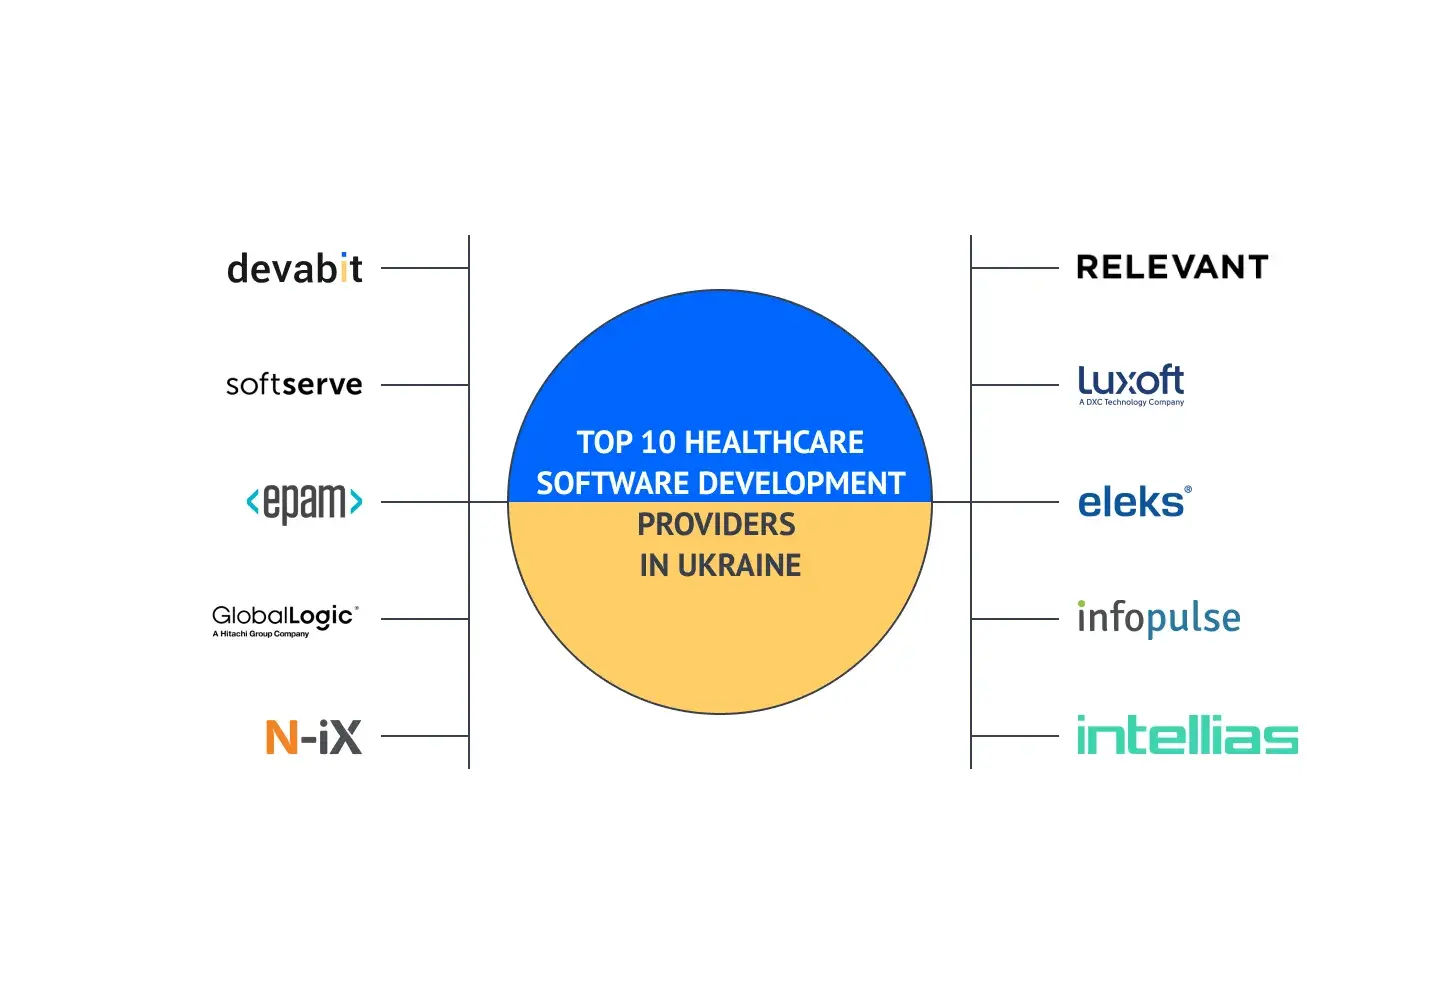 Top 5 custom healthcare software development companies in Eastern Europe by devabit